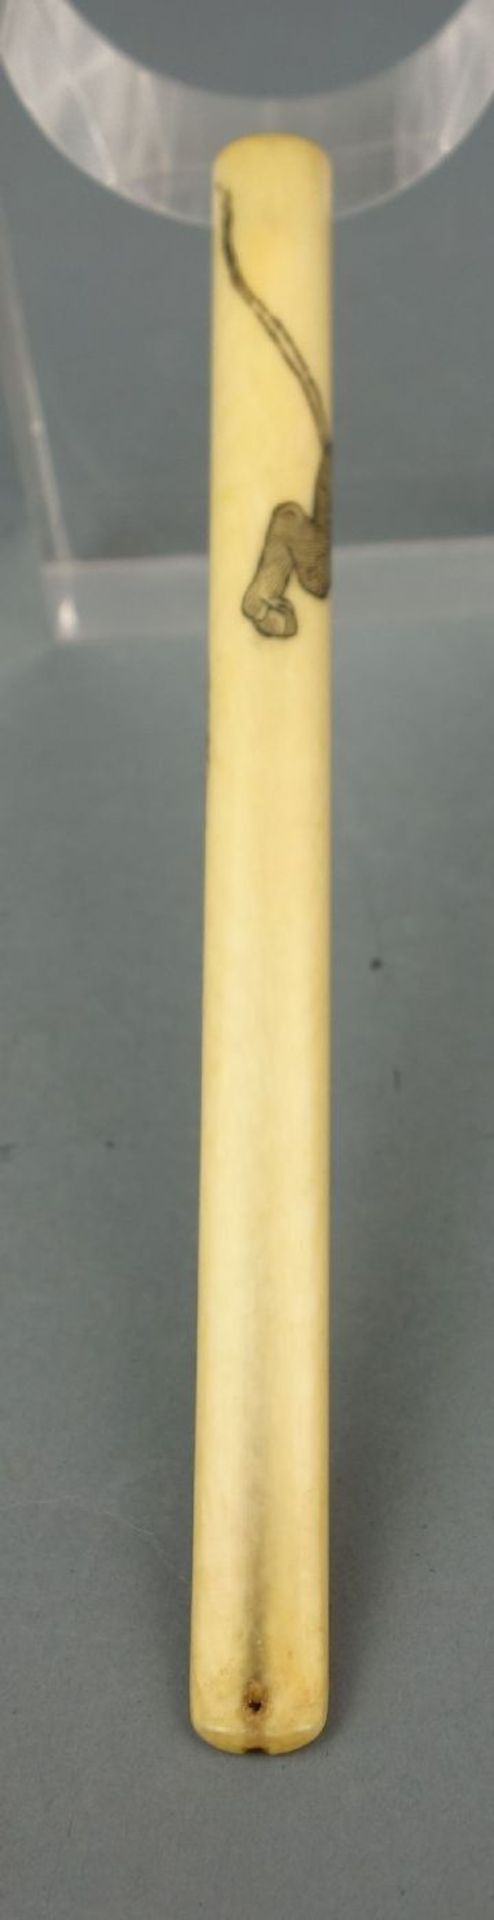 ZIGARETTENSPITZE MIT PANTHER - MOTIV / ivory cigarette holder with a black panther, Elfenbein, - Image 3 of 4